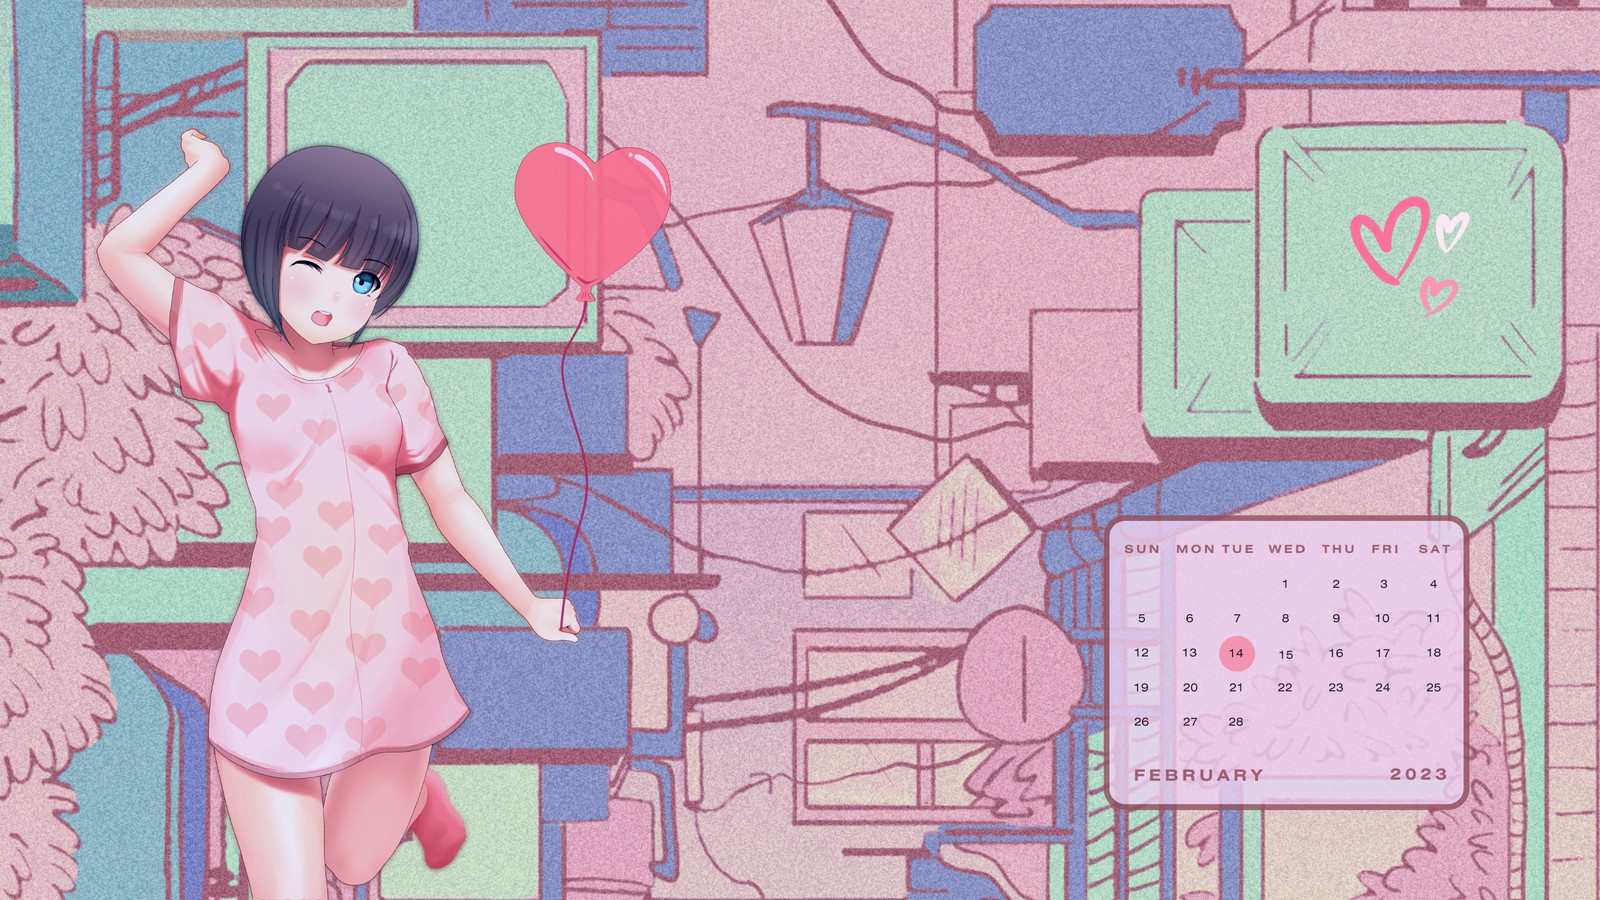 Customize 105+ Anime Desktop Wallpapers Templates Online - Canva